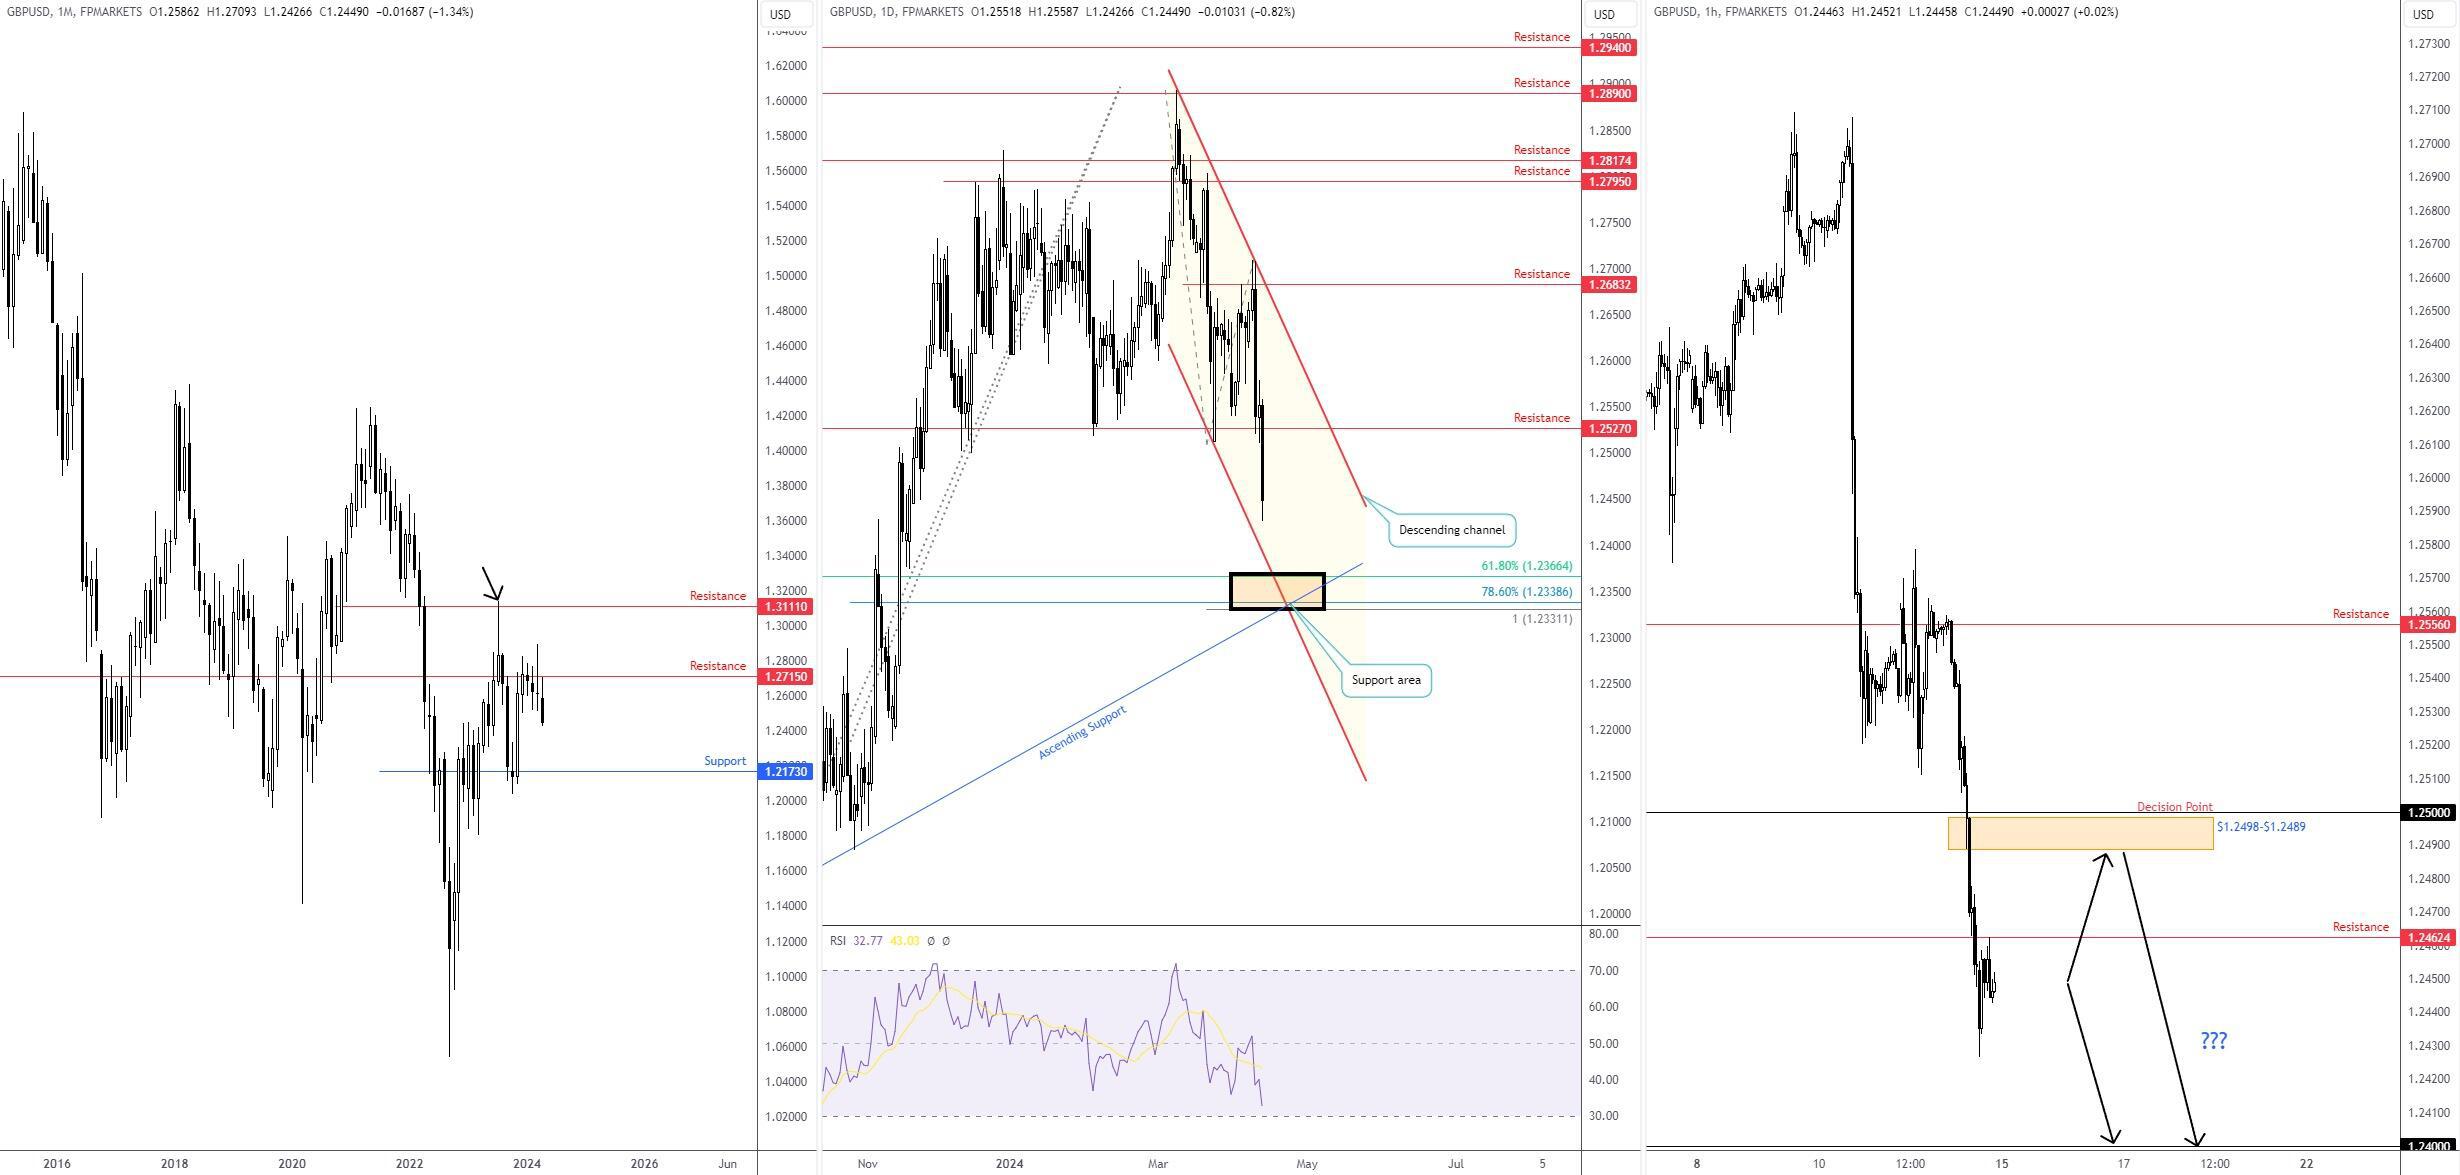 GBP/USD on the radar this week